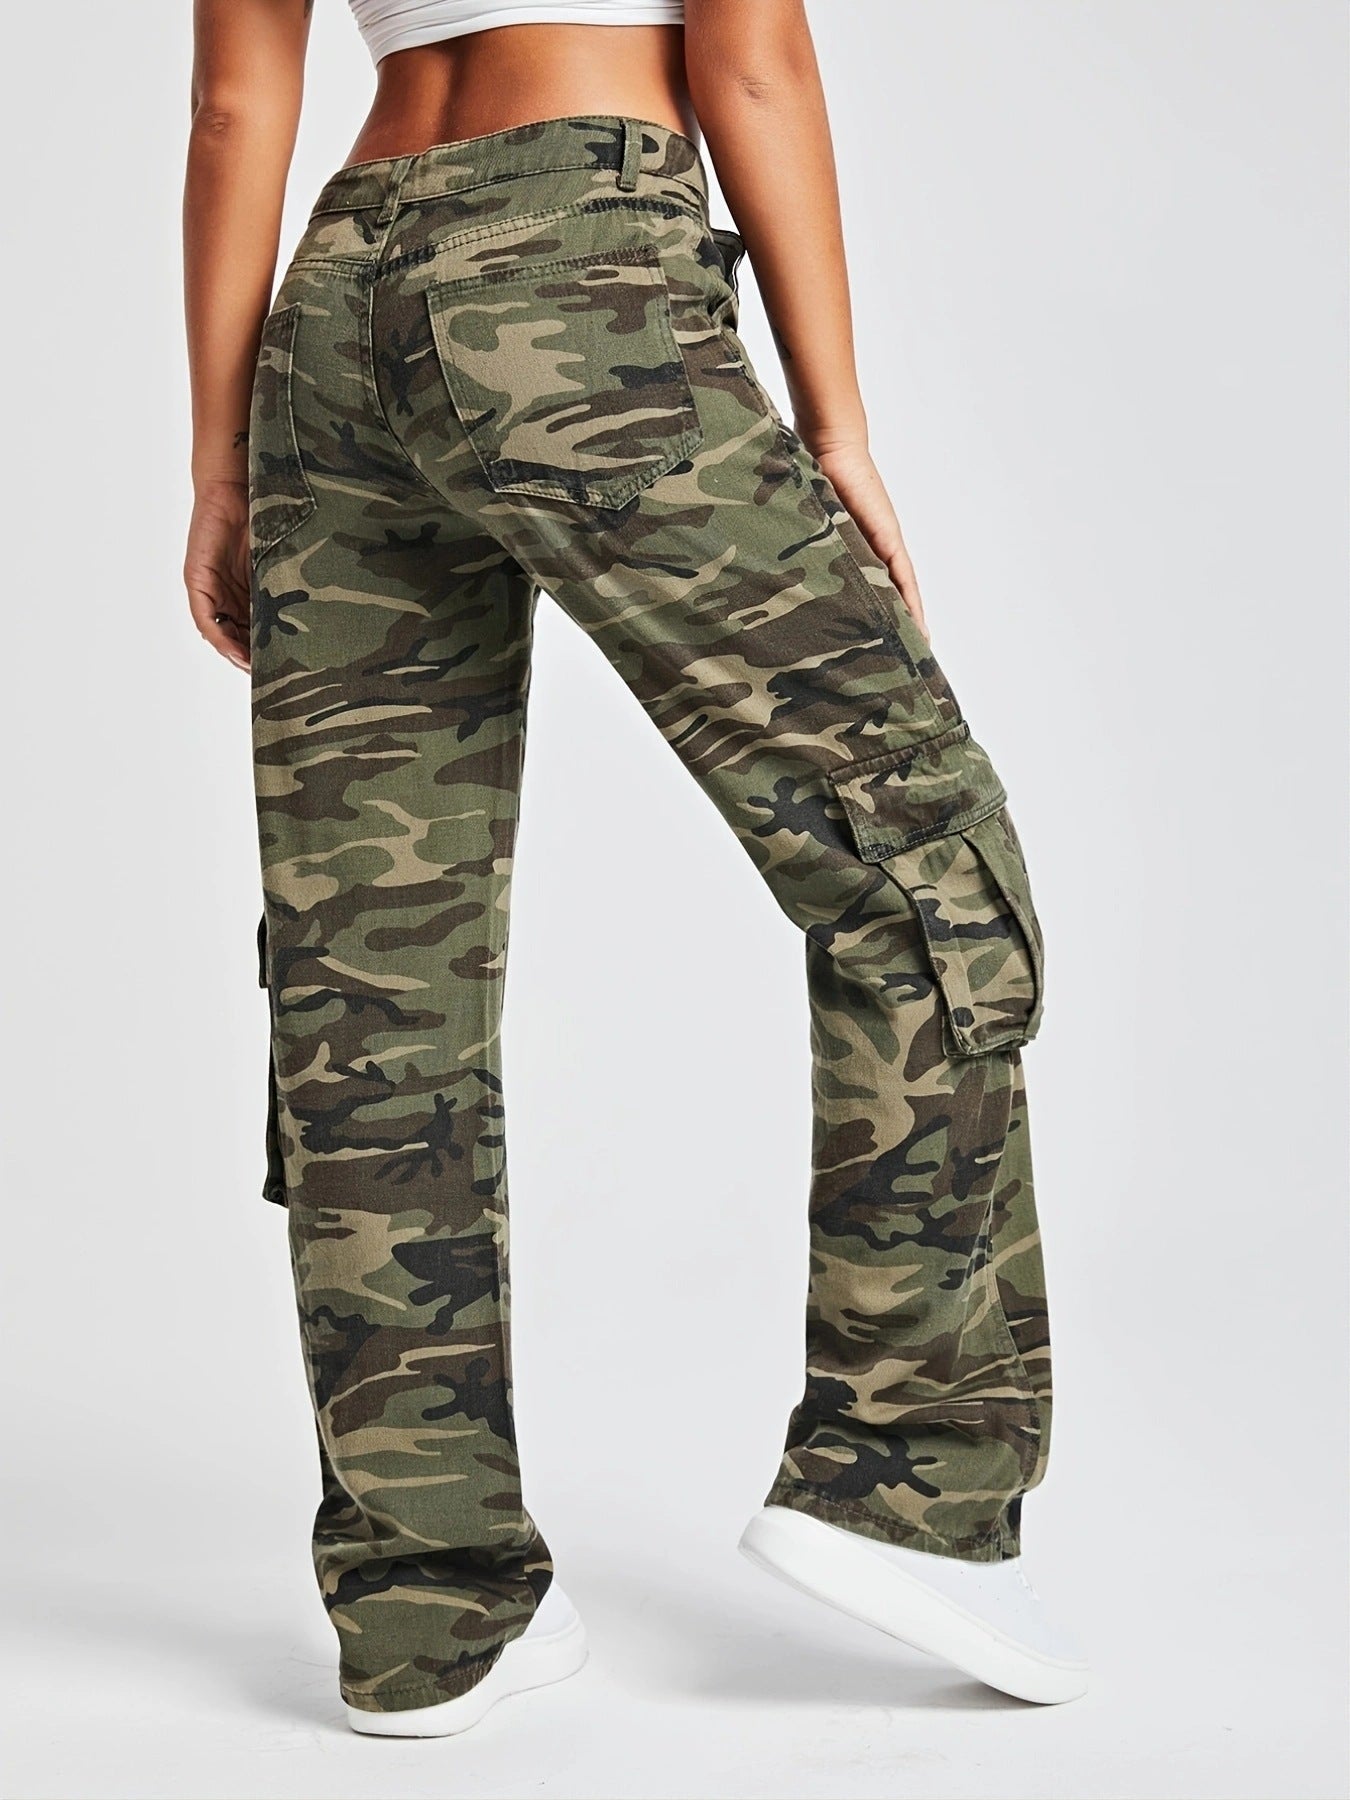 FZ Women's Camouflage Cargo Denim Pants - FZwear